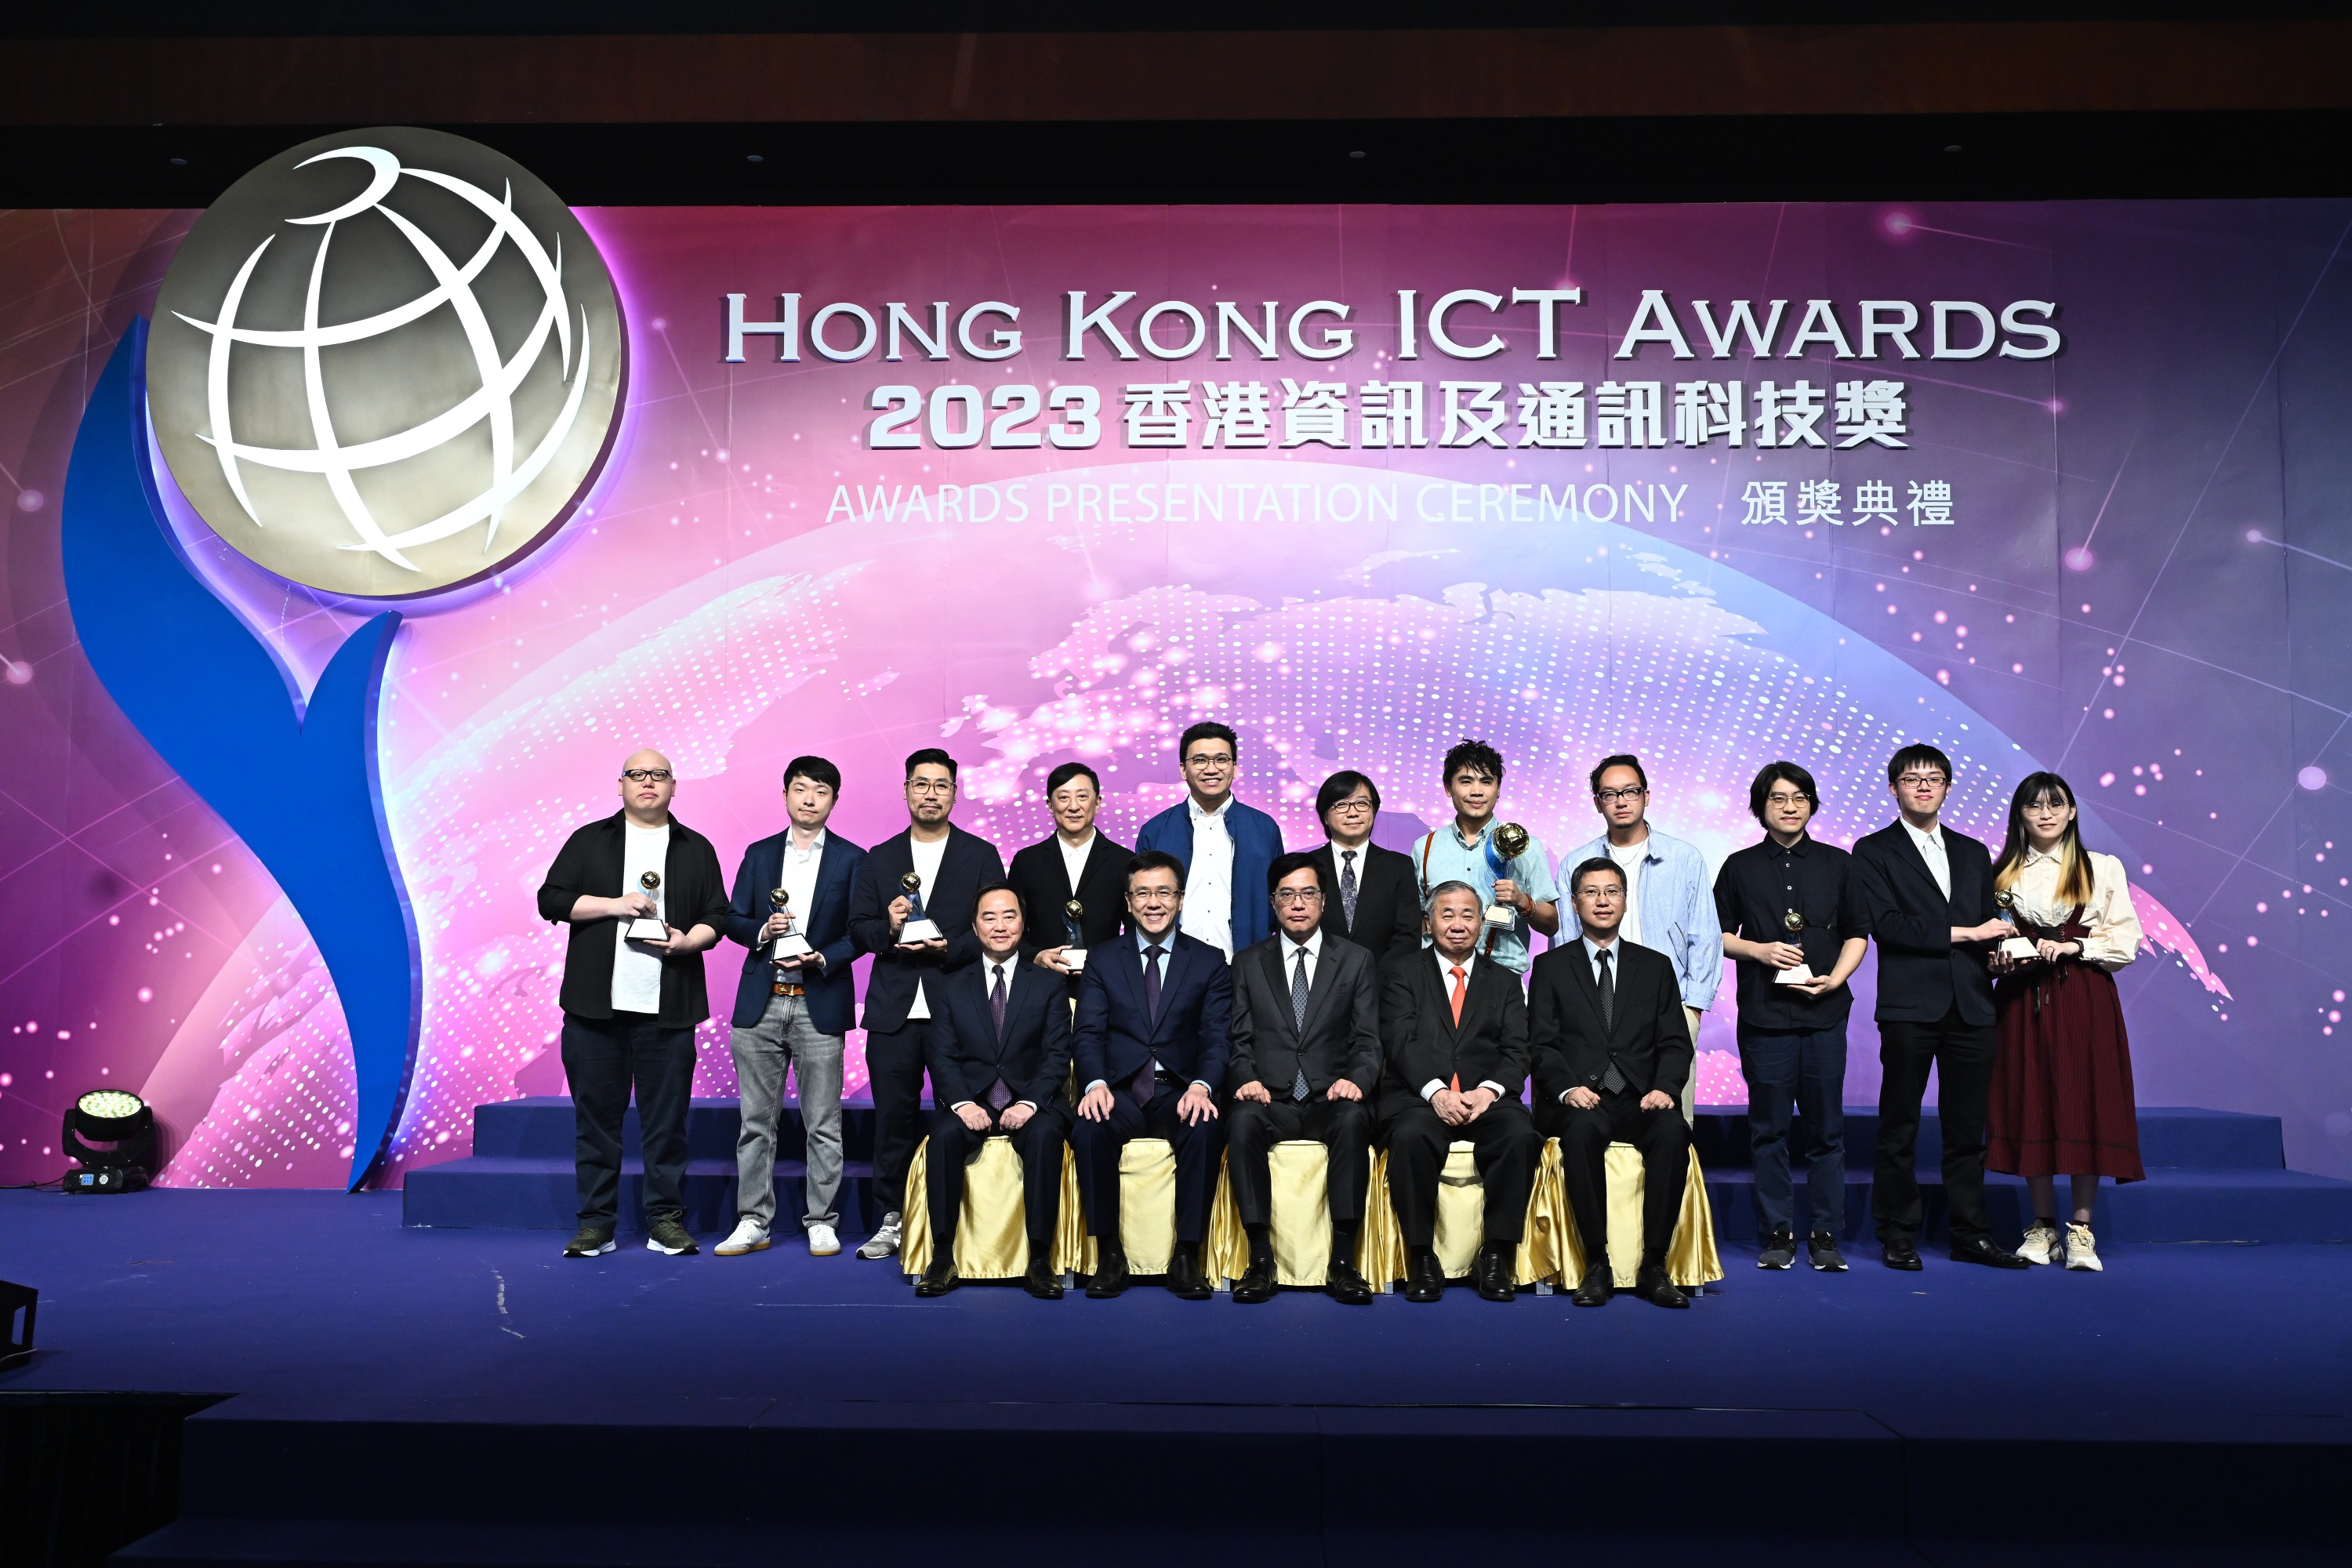 Hong Kong ICT Awards 2023 Digital Entertainment Award Winners Group Photo